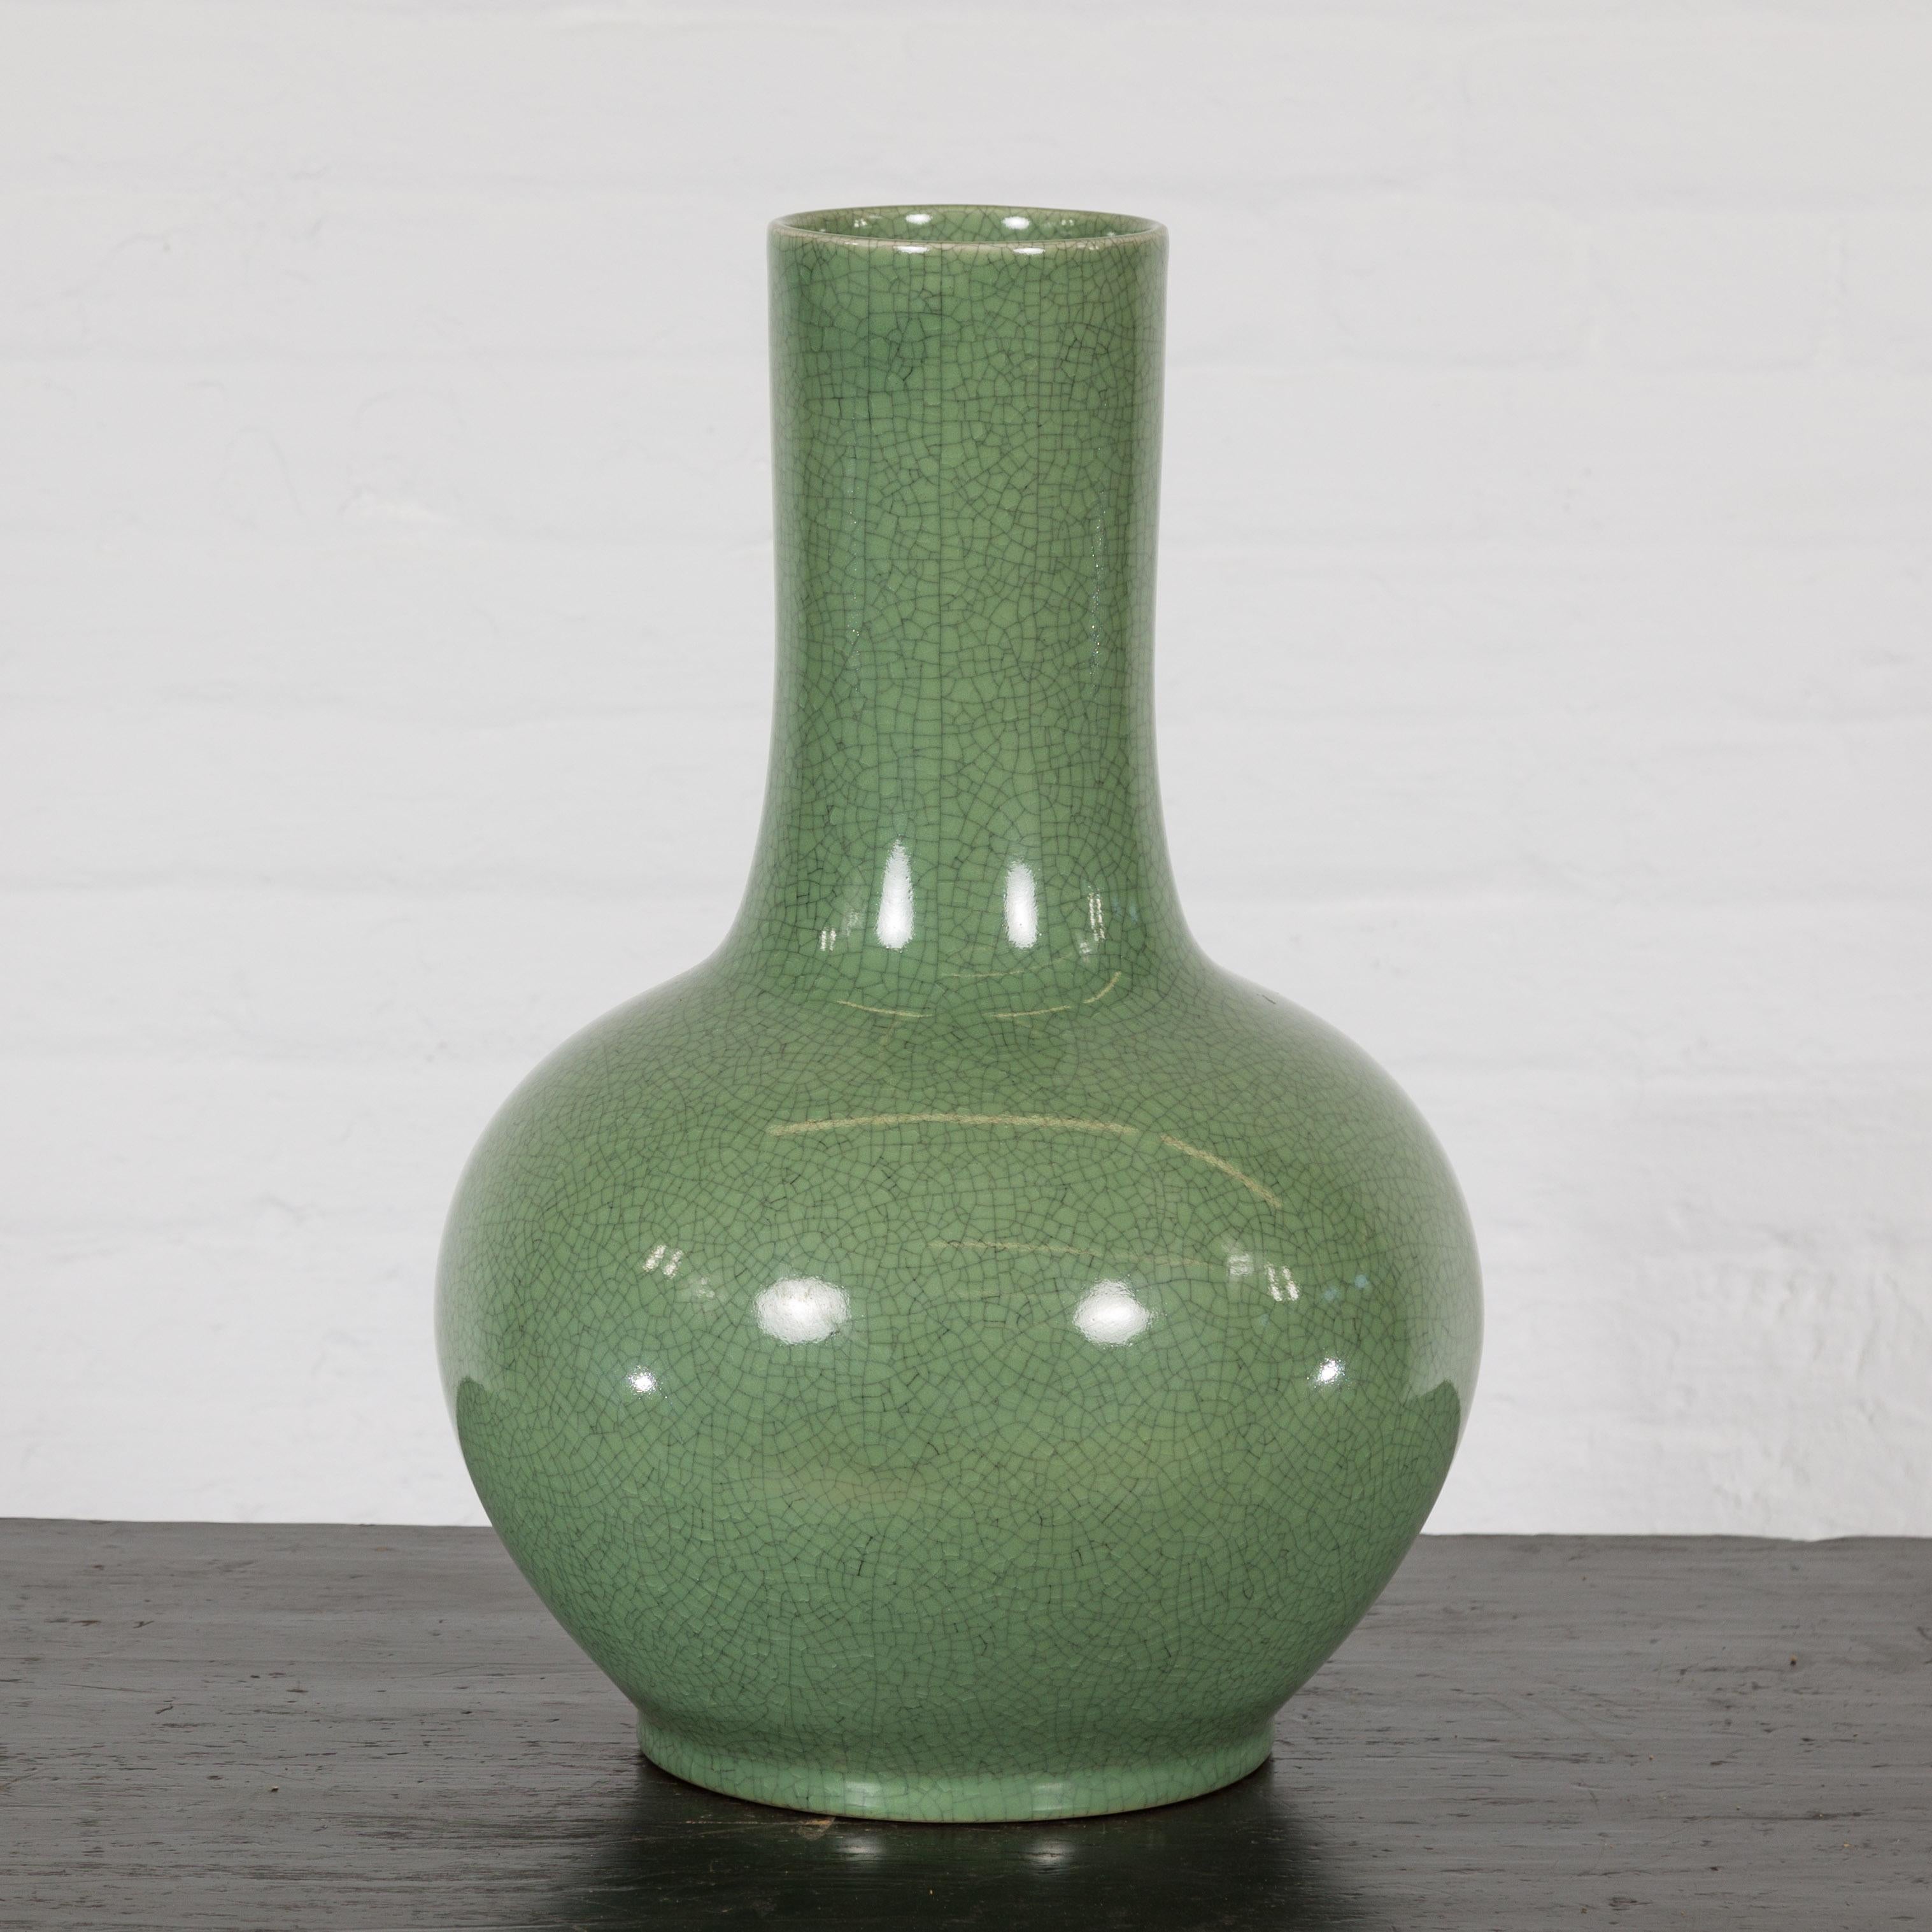 Glazed Chinese Vintage Ceramic Vase with Crackle Green Glaze and Narrow Neck